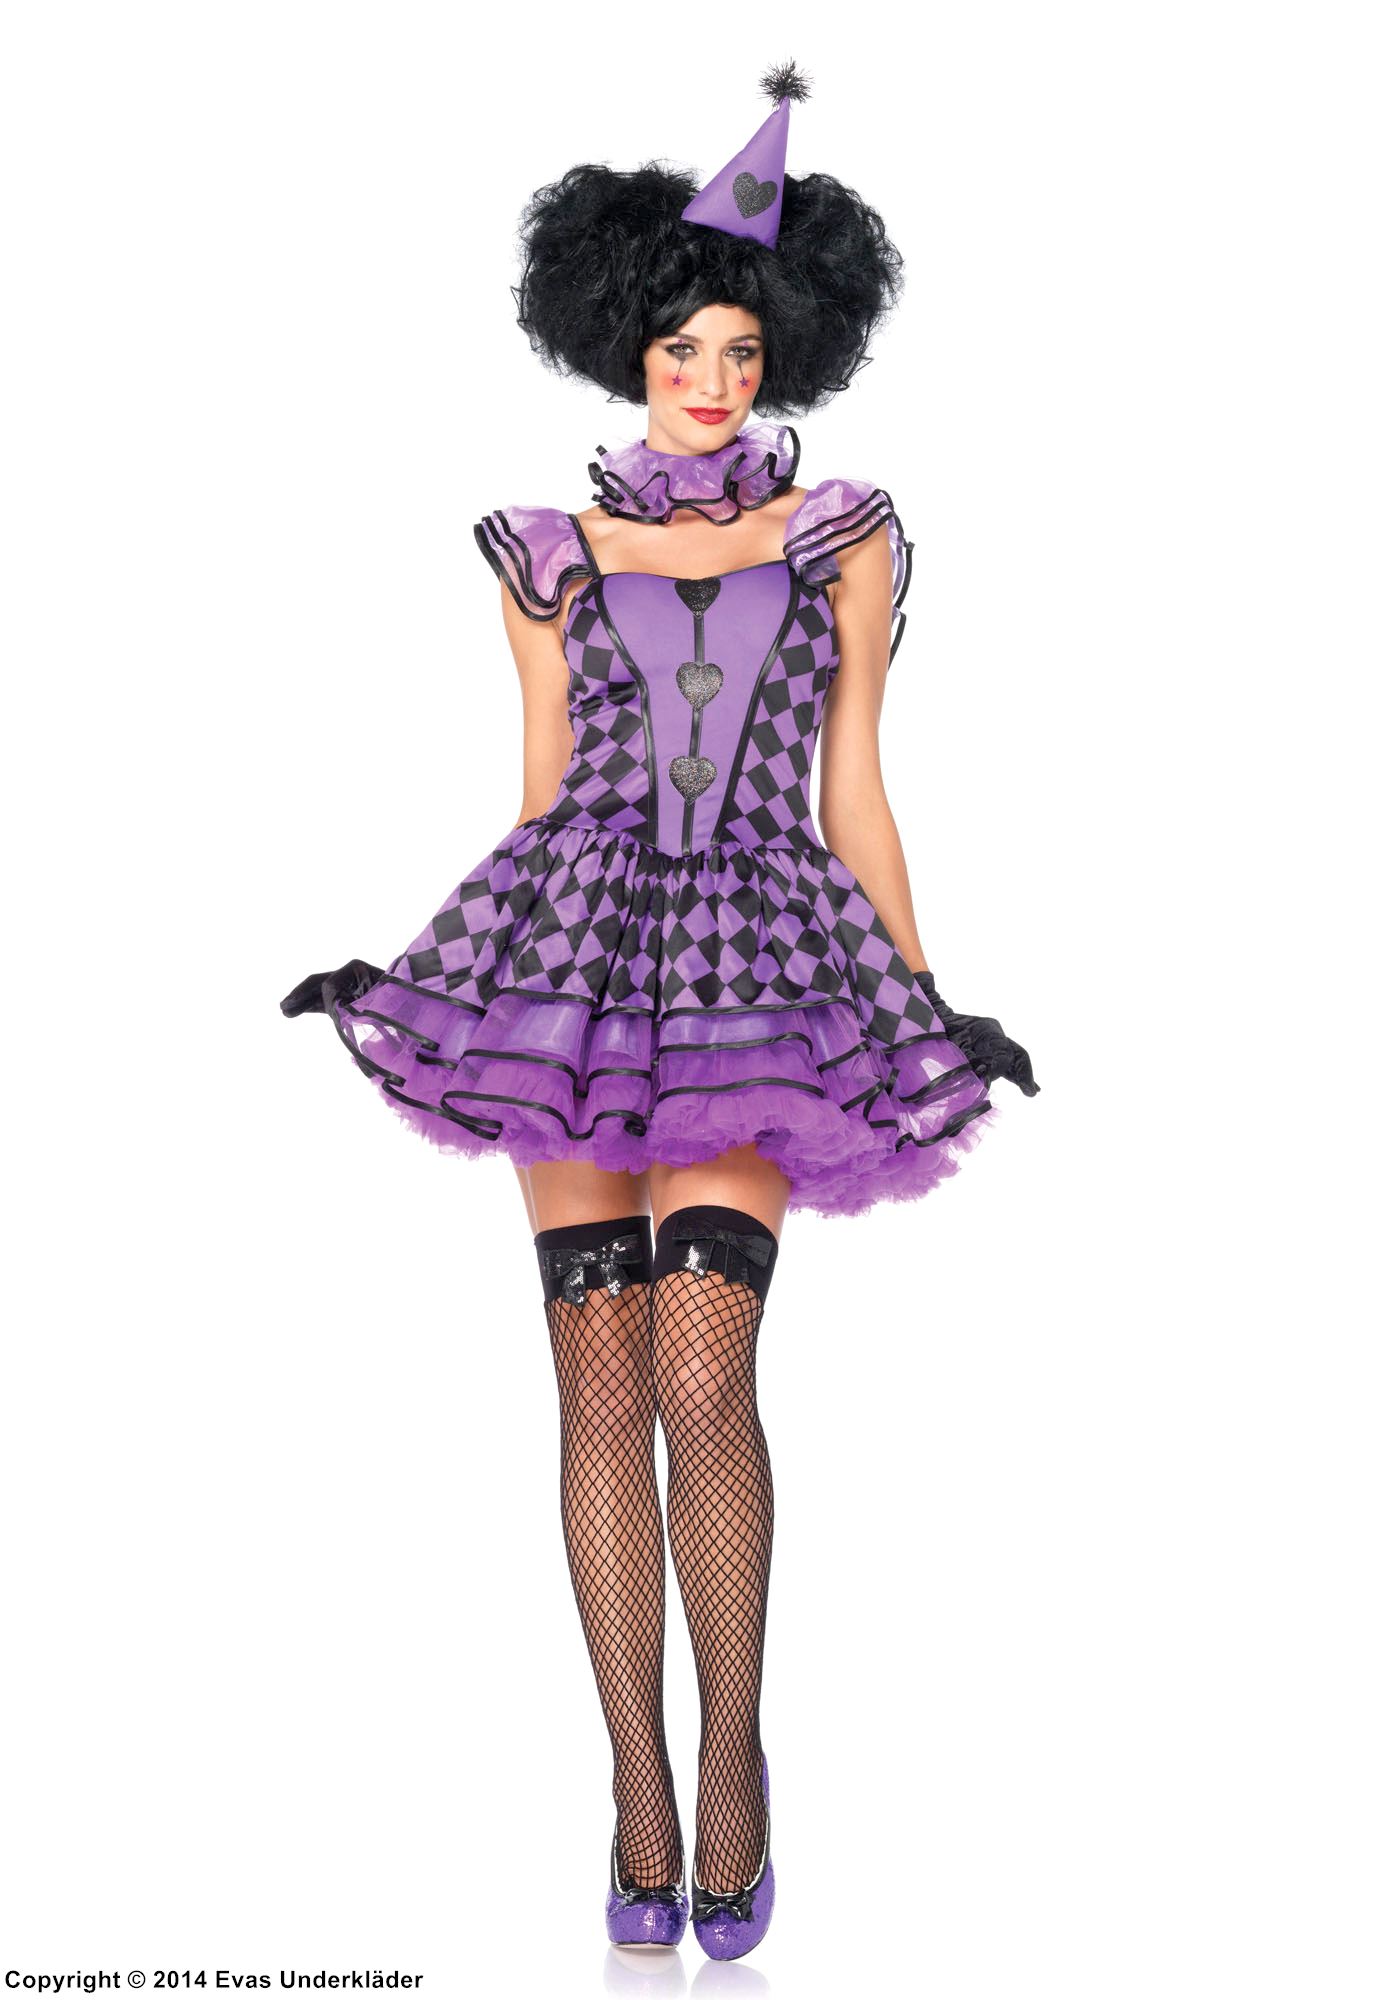 Clown, costume dress, ruffles, hearts, checkered pattern